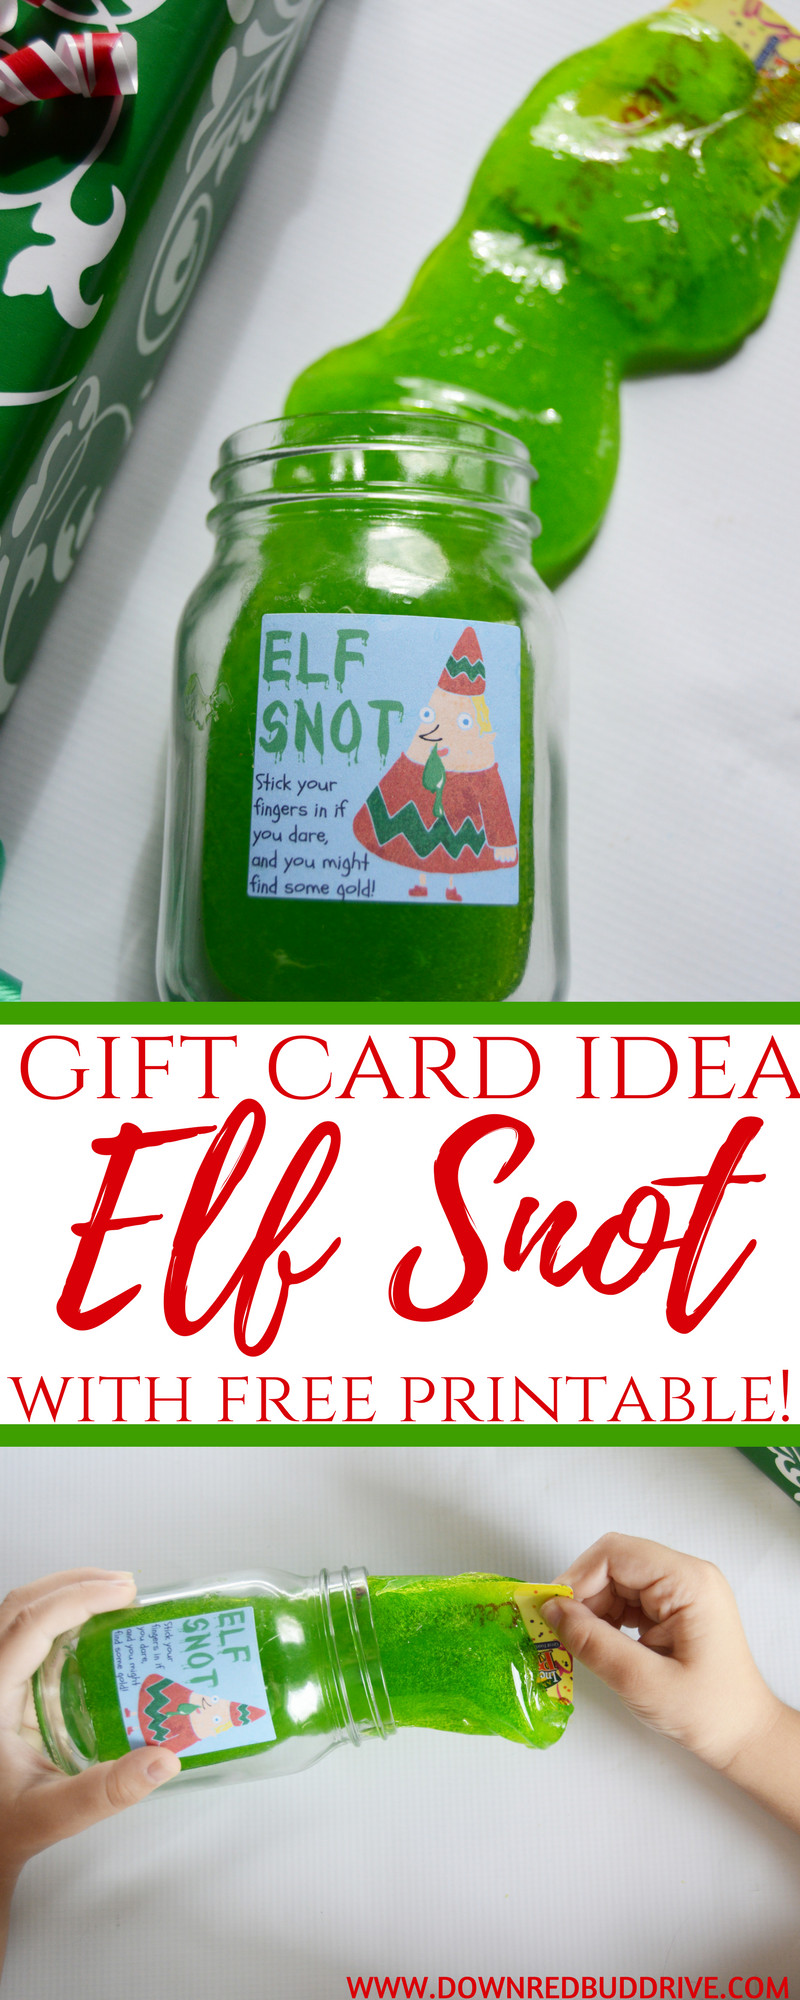 Gag Gift For Kids
 Elf Snot Gift Card Gifts Christmas DIY